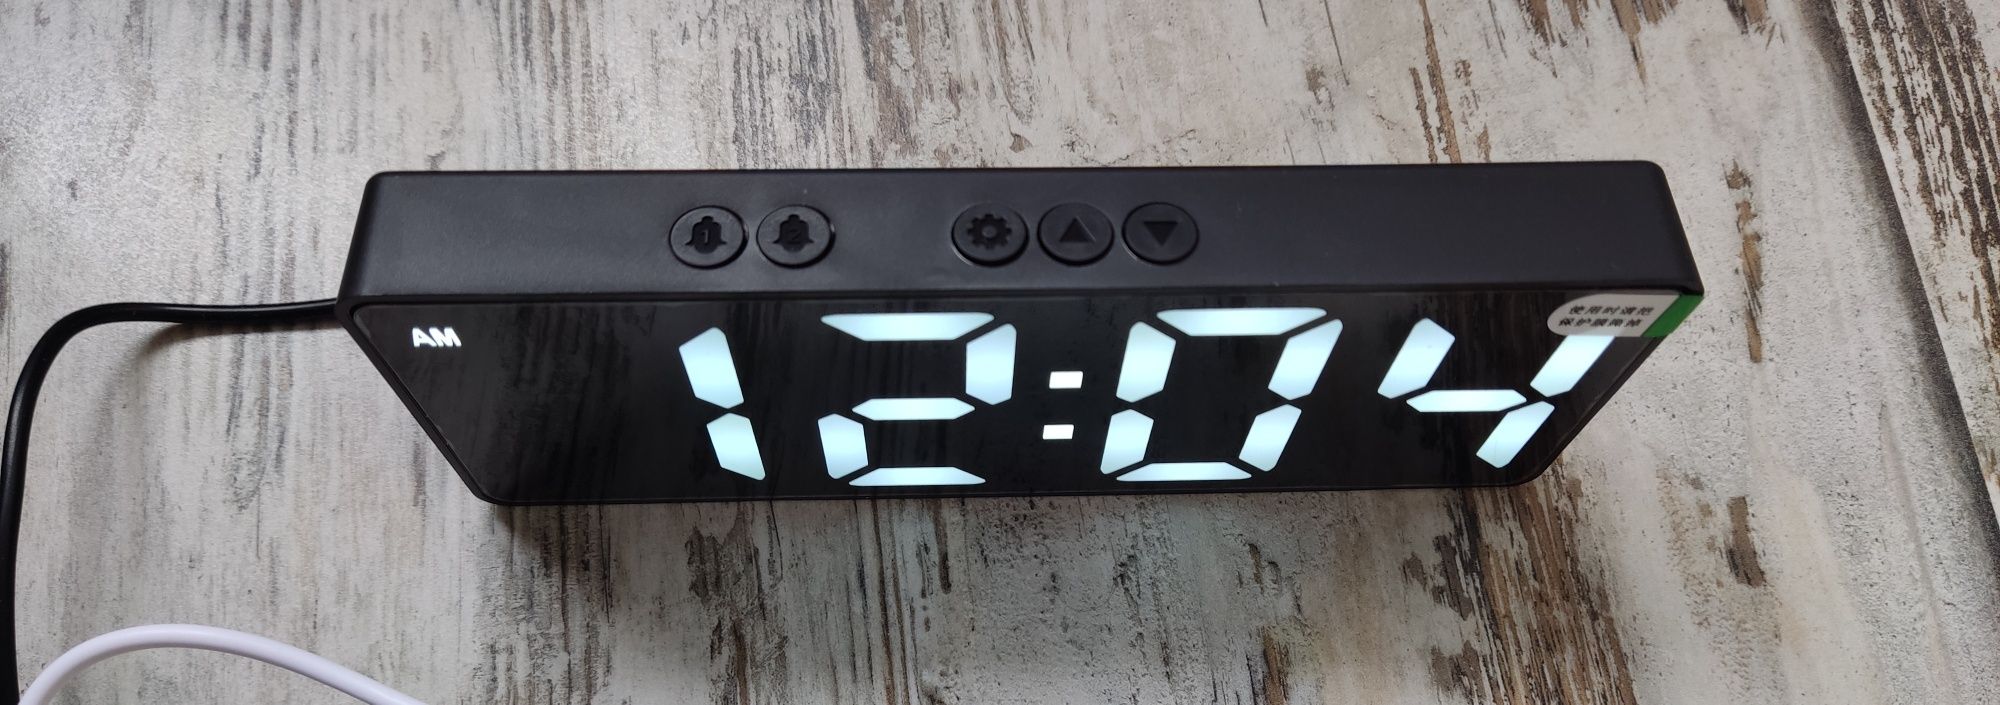 Часы LED настольные с будильником электронные.